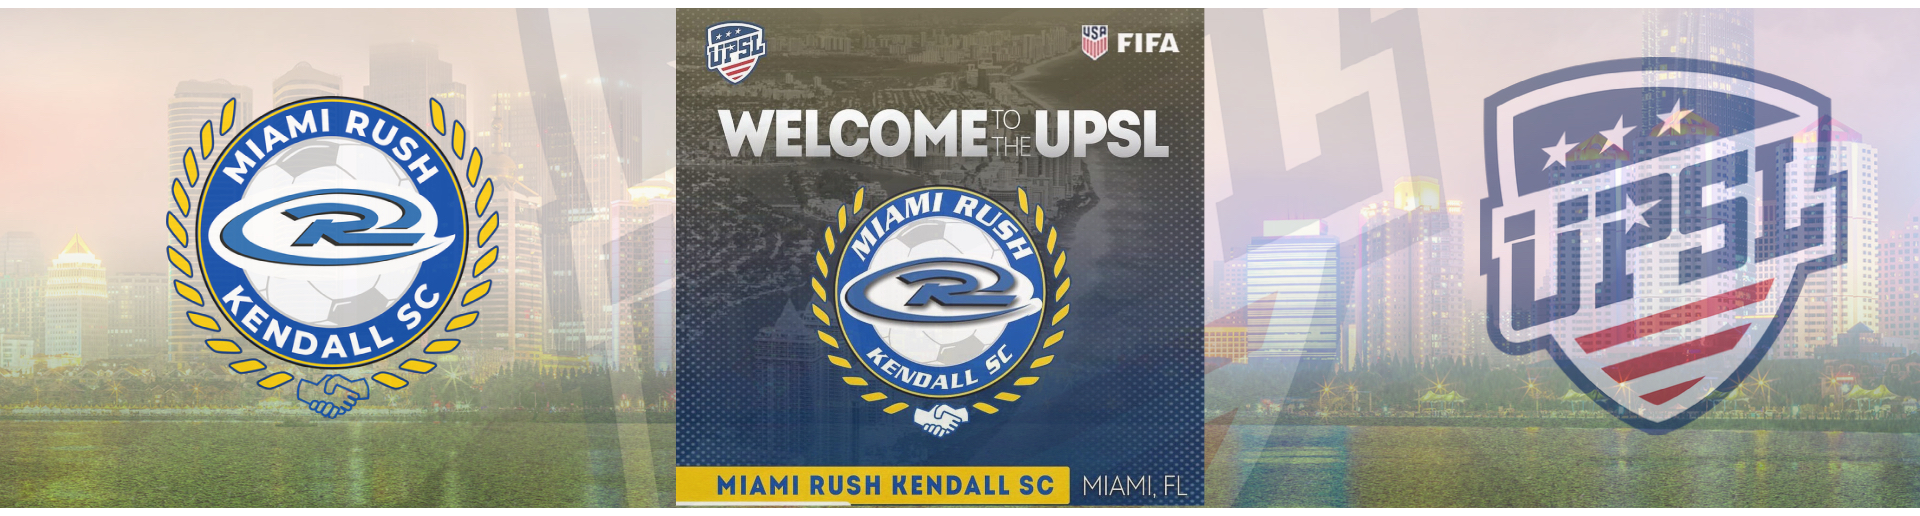 Miami Rush Kendall SC- Welcome to UPSL 